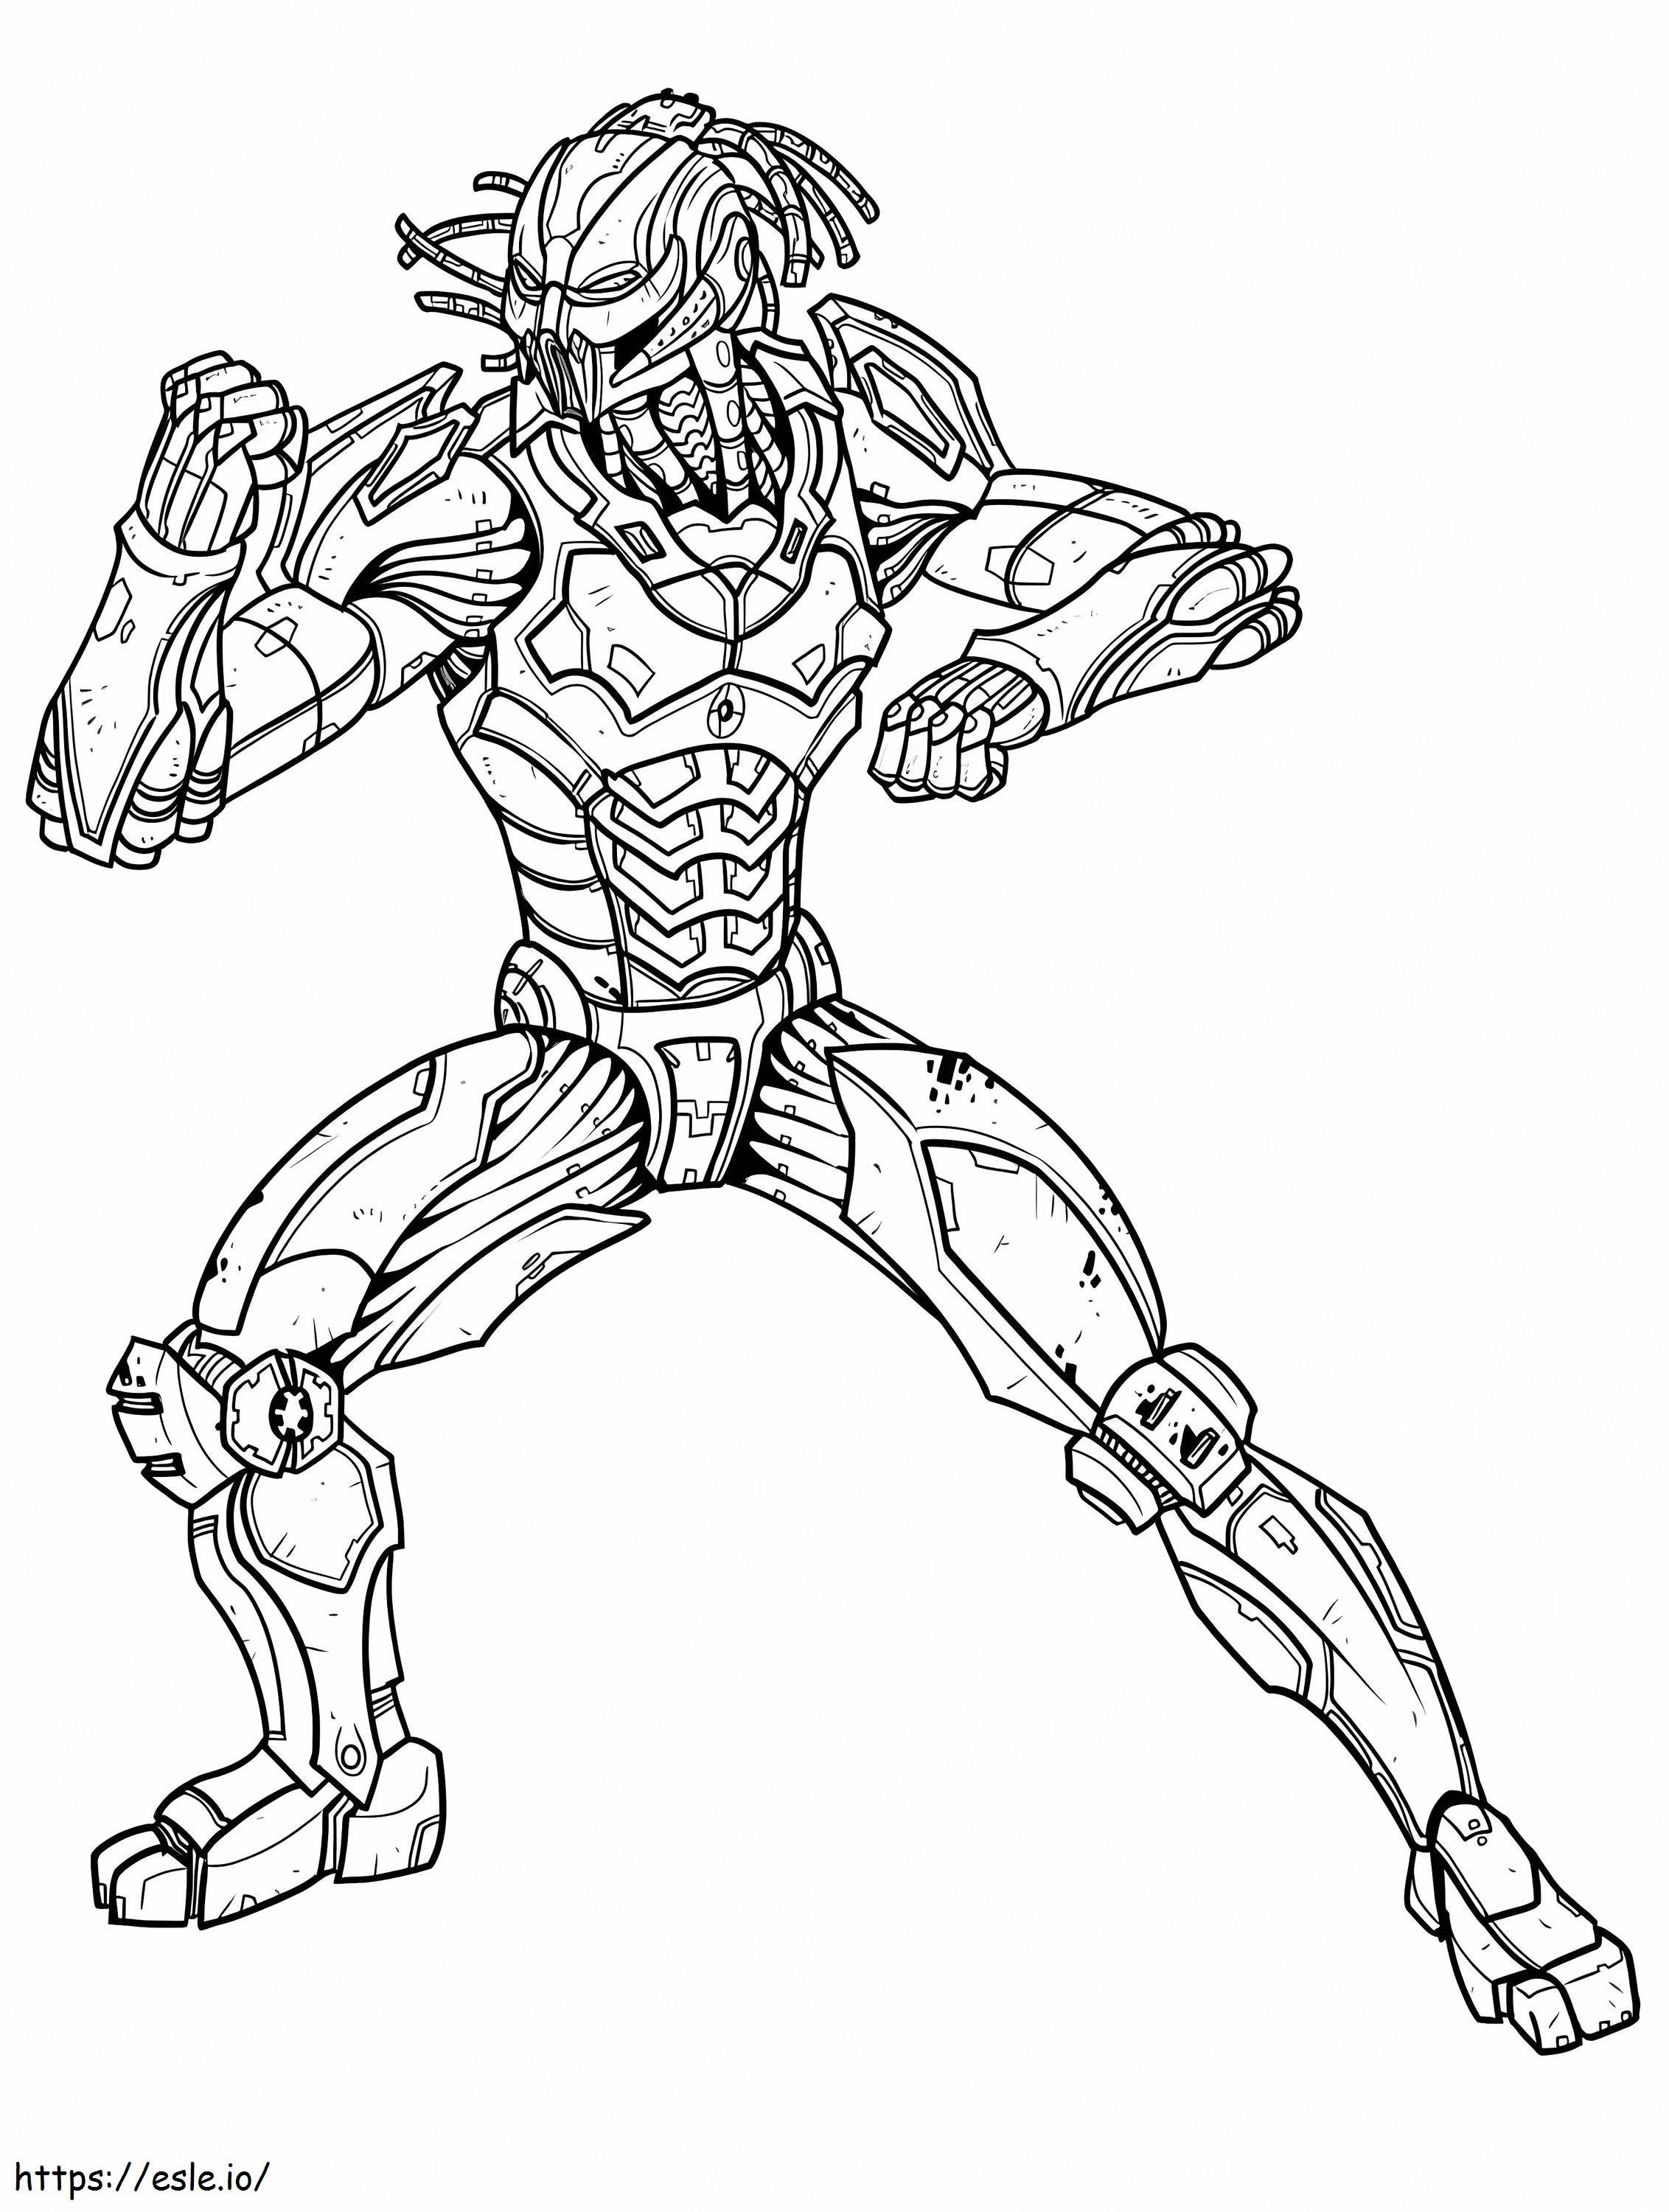 Predator Mortal Kombat coloring page